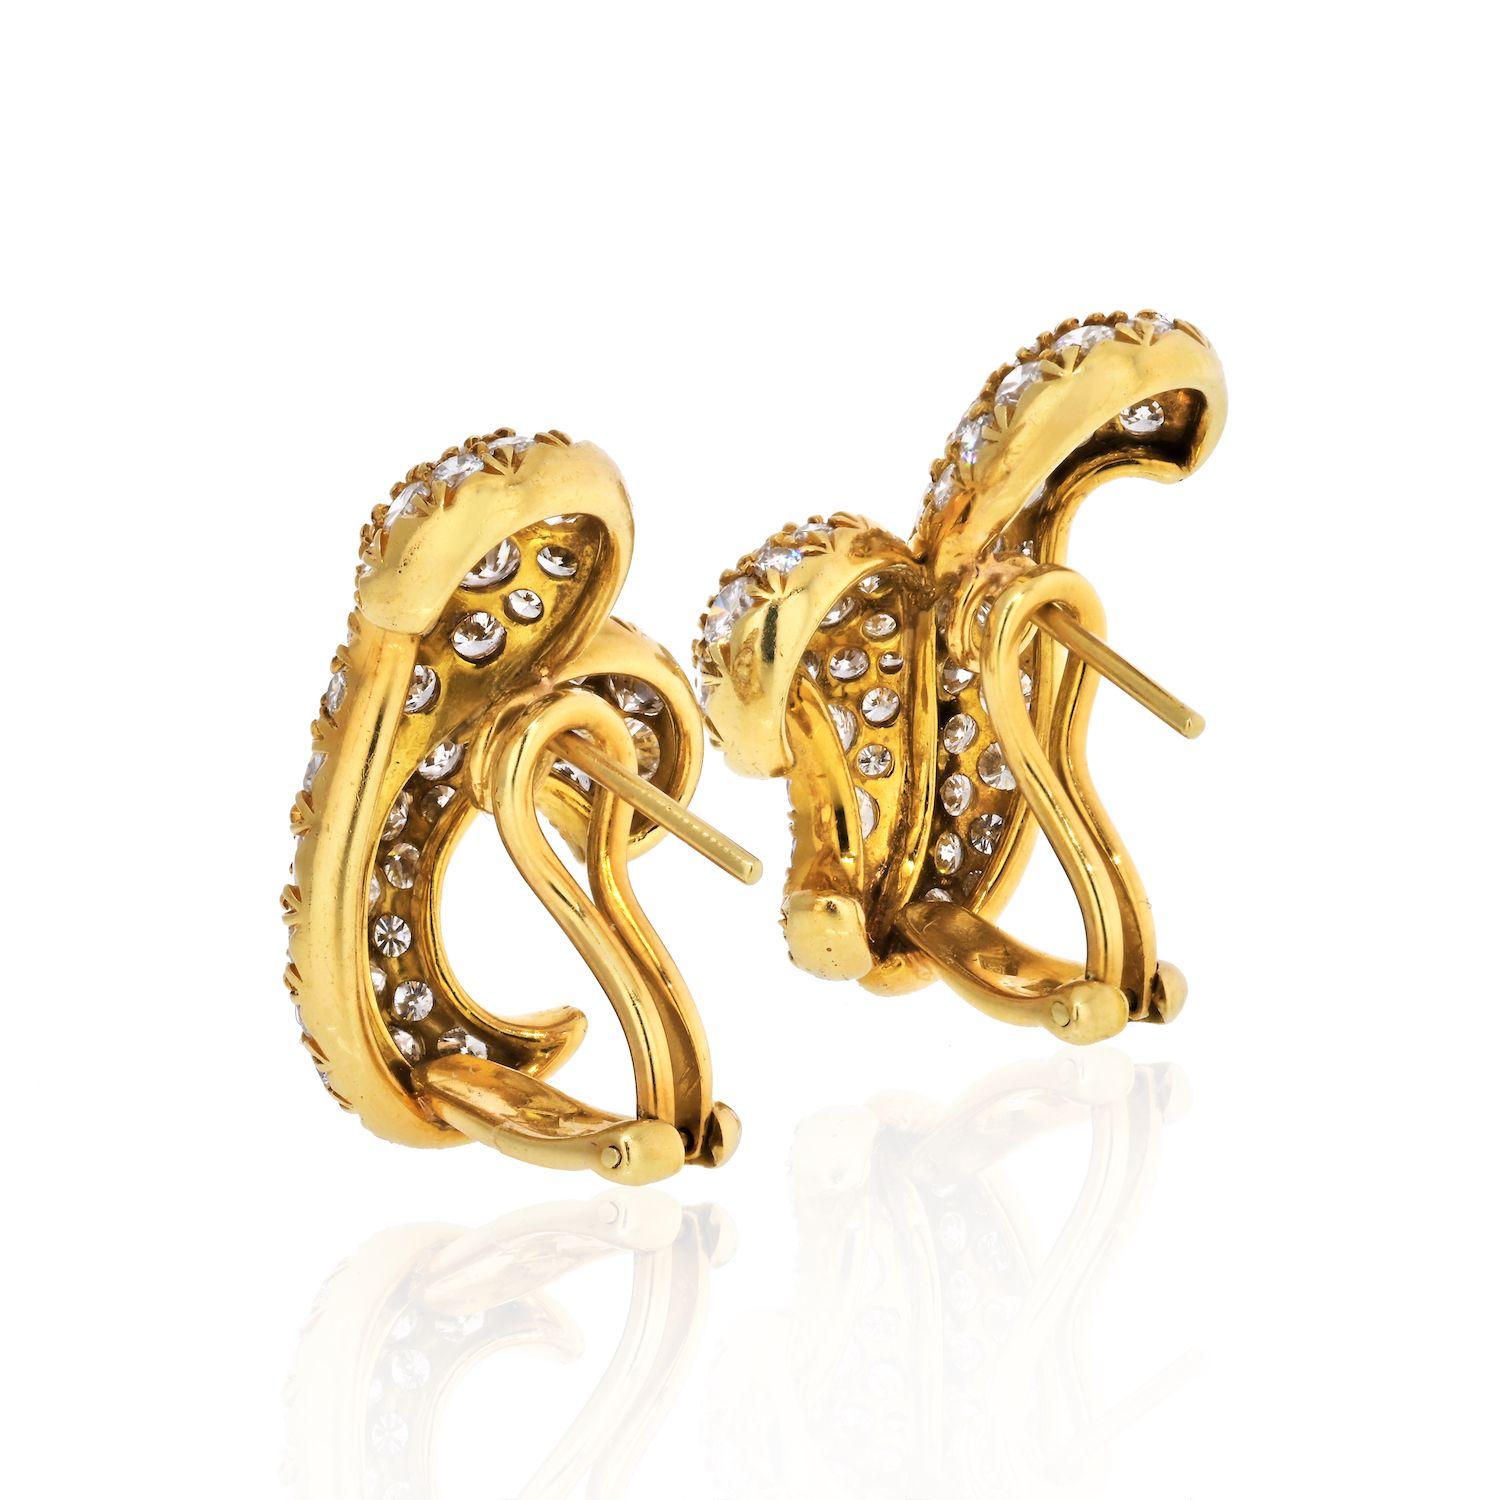 Modern H. Stern 18 Karat Yellow Gold 4.75 Carat Pave Diamond Earrings